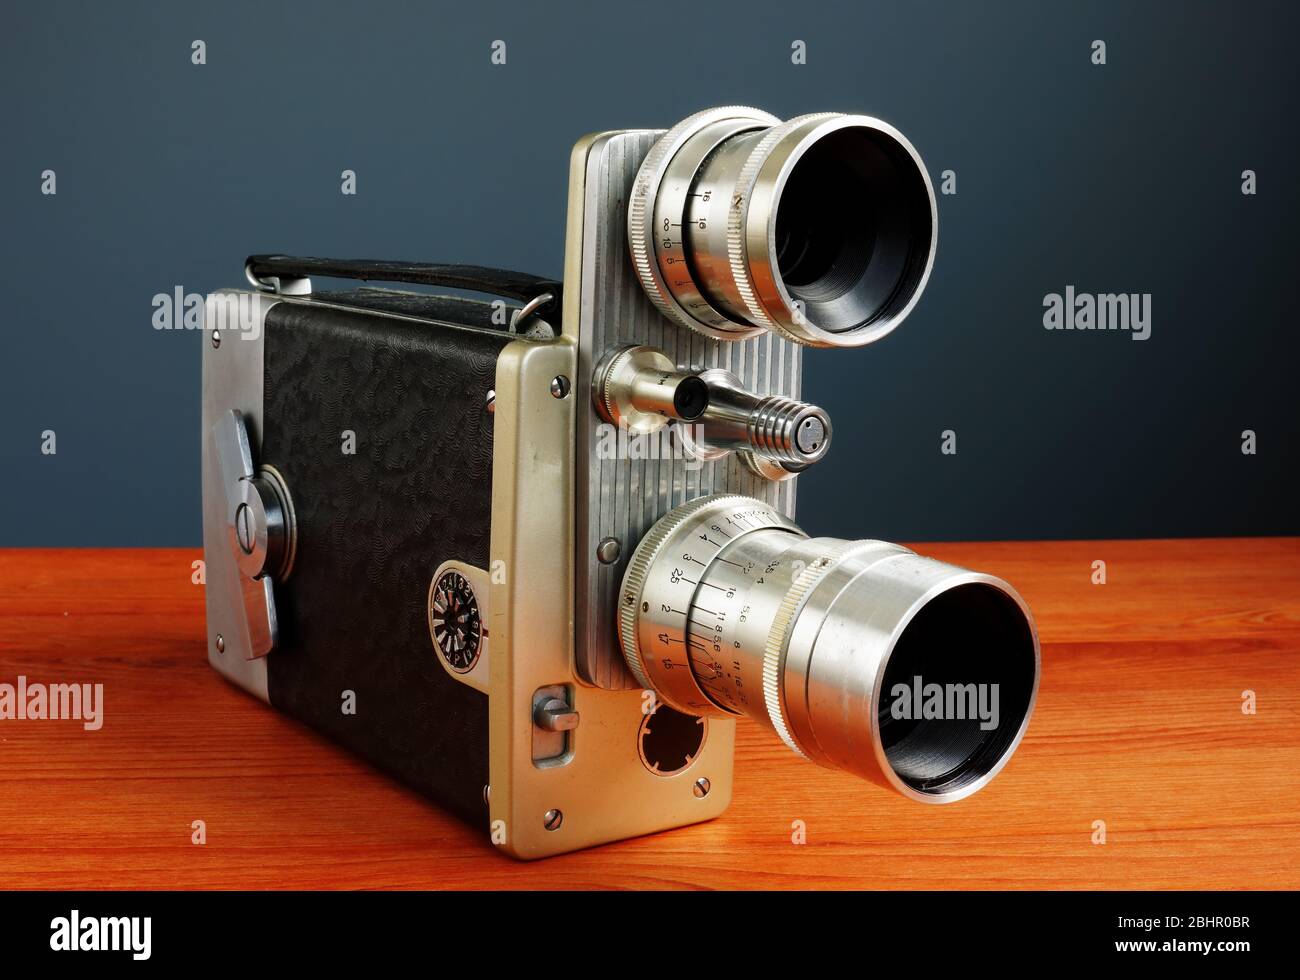 Kompakte Vintage-Filmkamera. Kreatives Videoblog- oder vlog-Konzept. Stockfoto